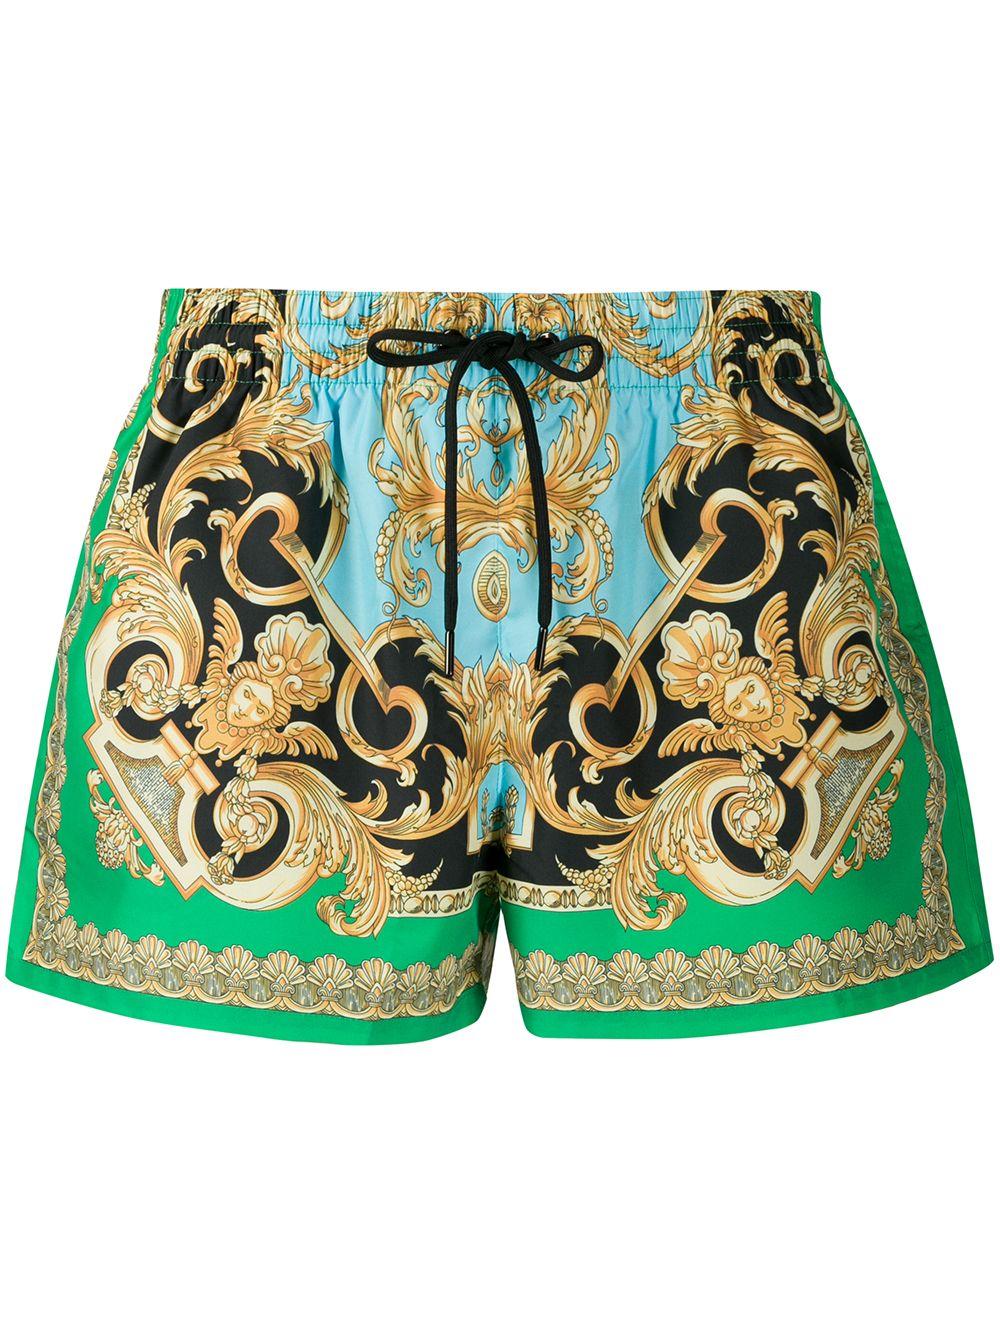 Versace Barroco Print Swim Shorts in 